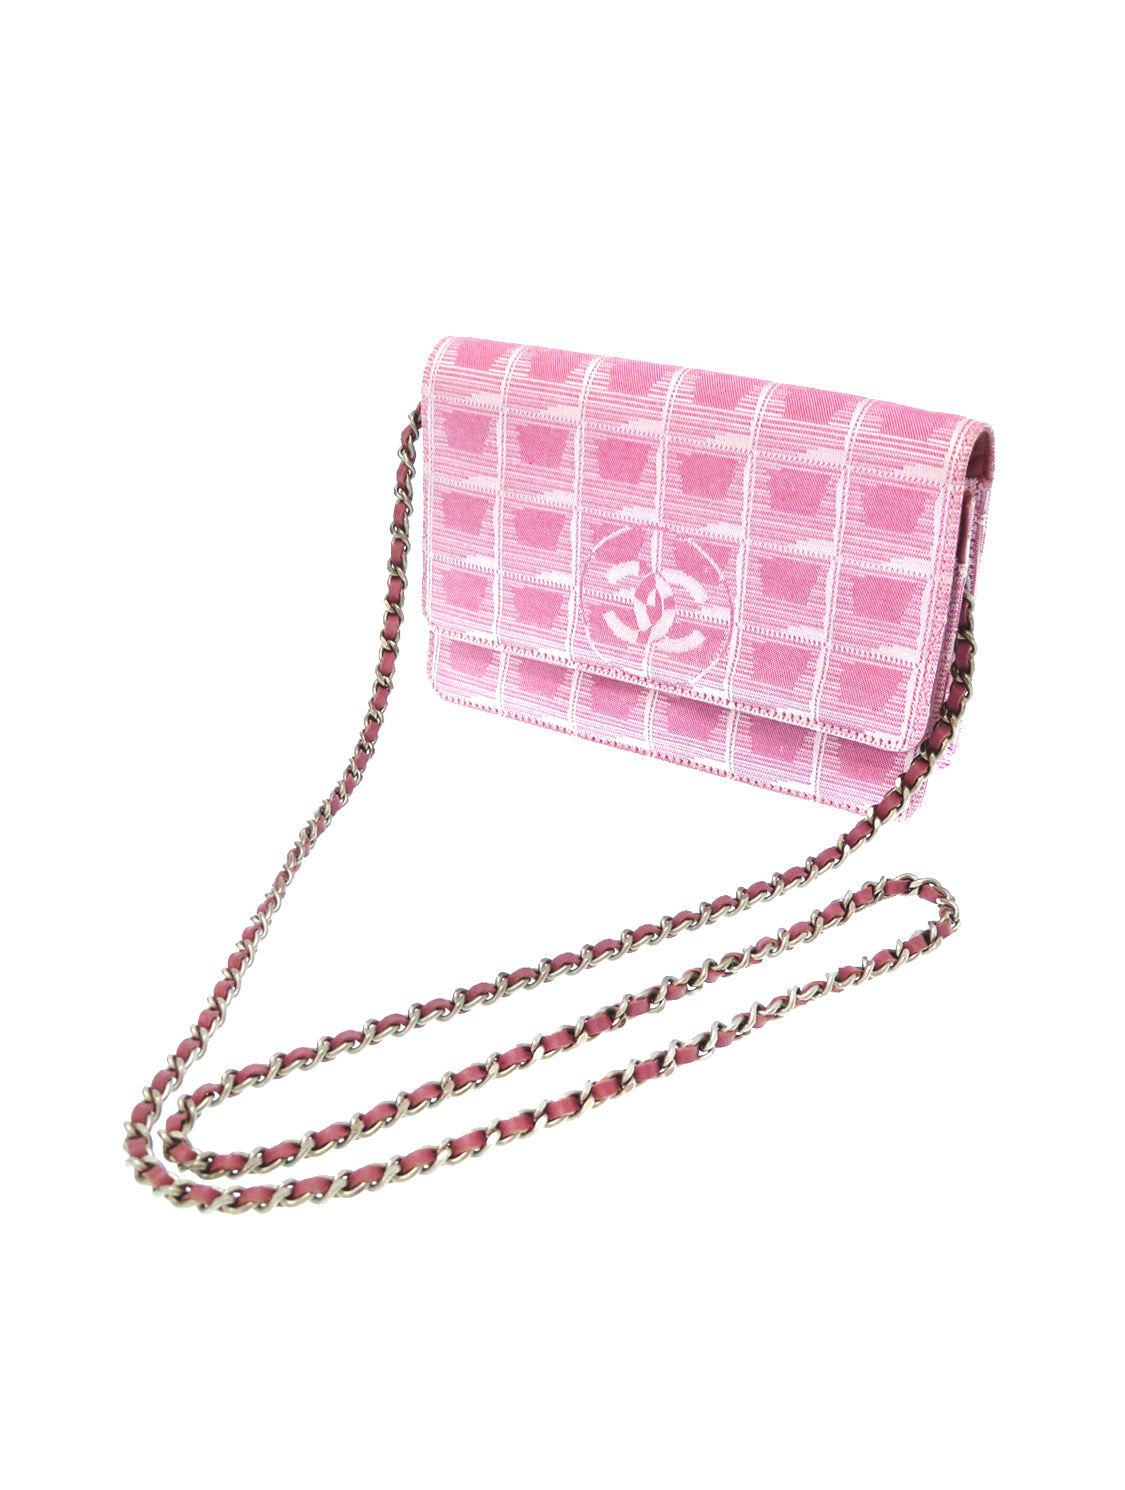 Chanel Sport Line Rare Pink Flap Bag